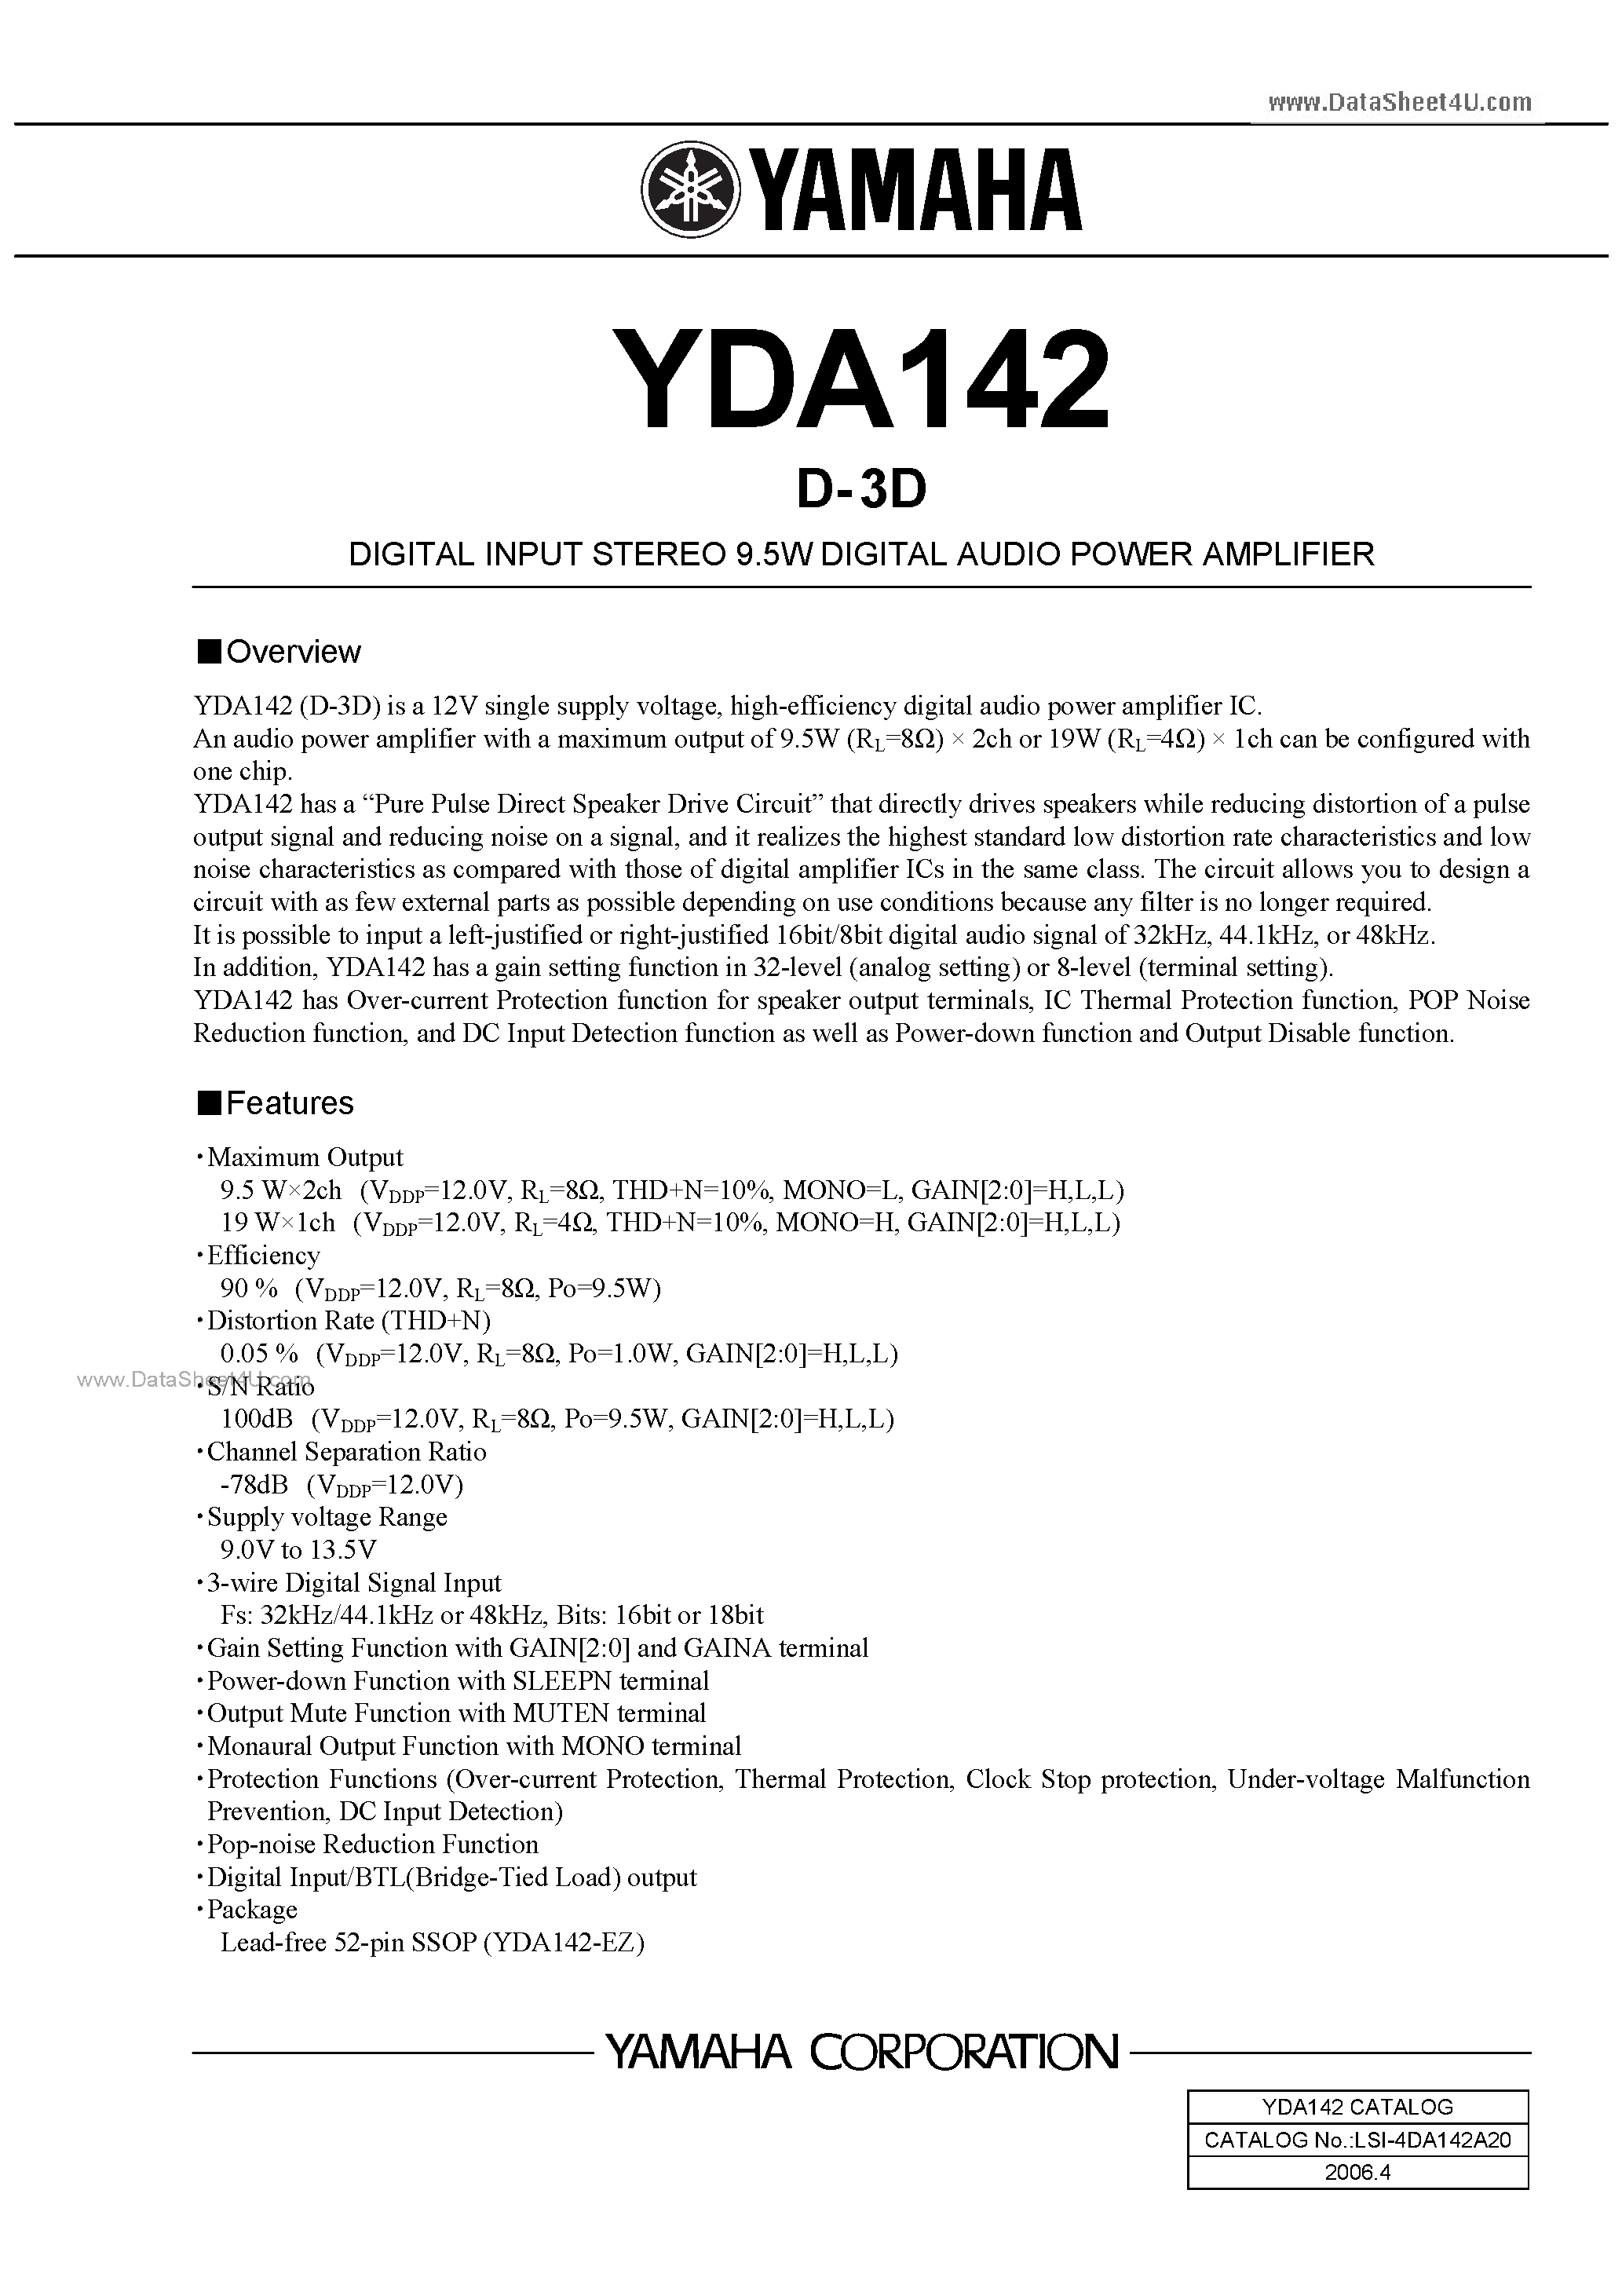 Даташит YDA142 - DIGITAL INPUT STEREO 9.5W DIGITAL AUDIO POWER AMPLIFIER страница 1